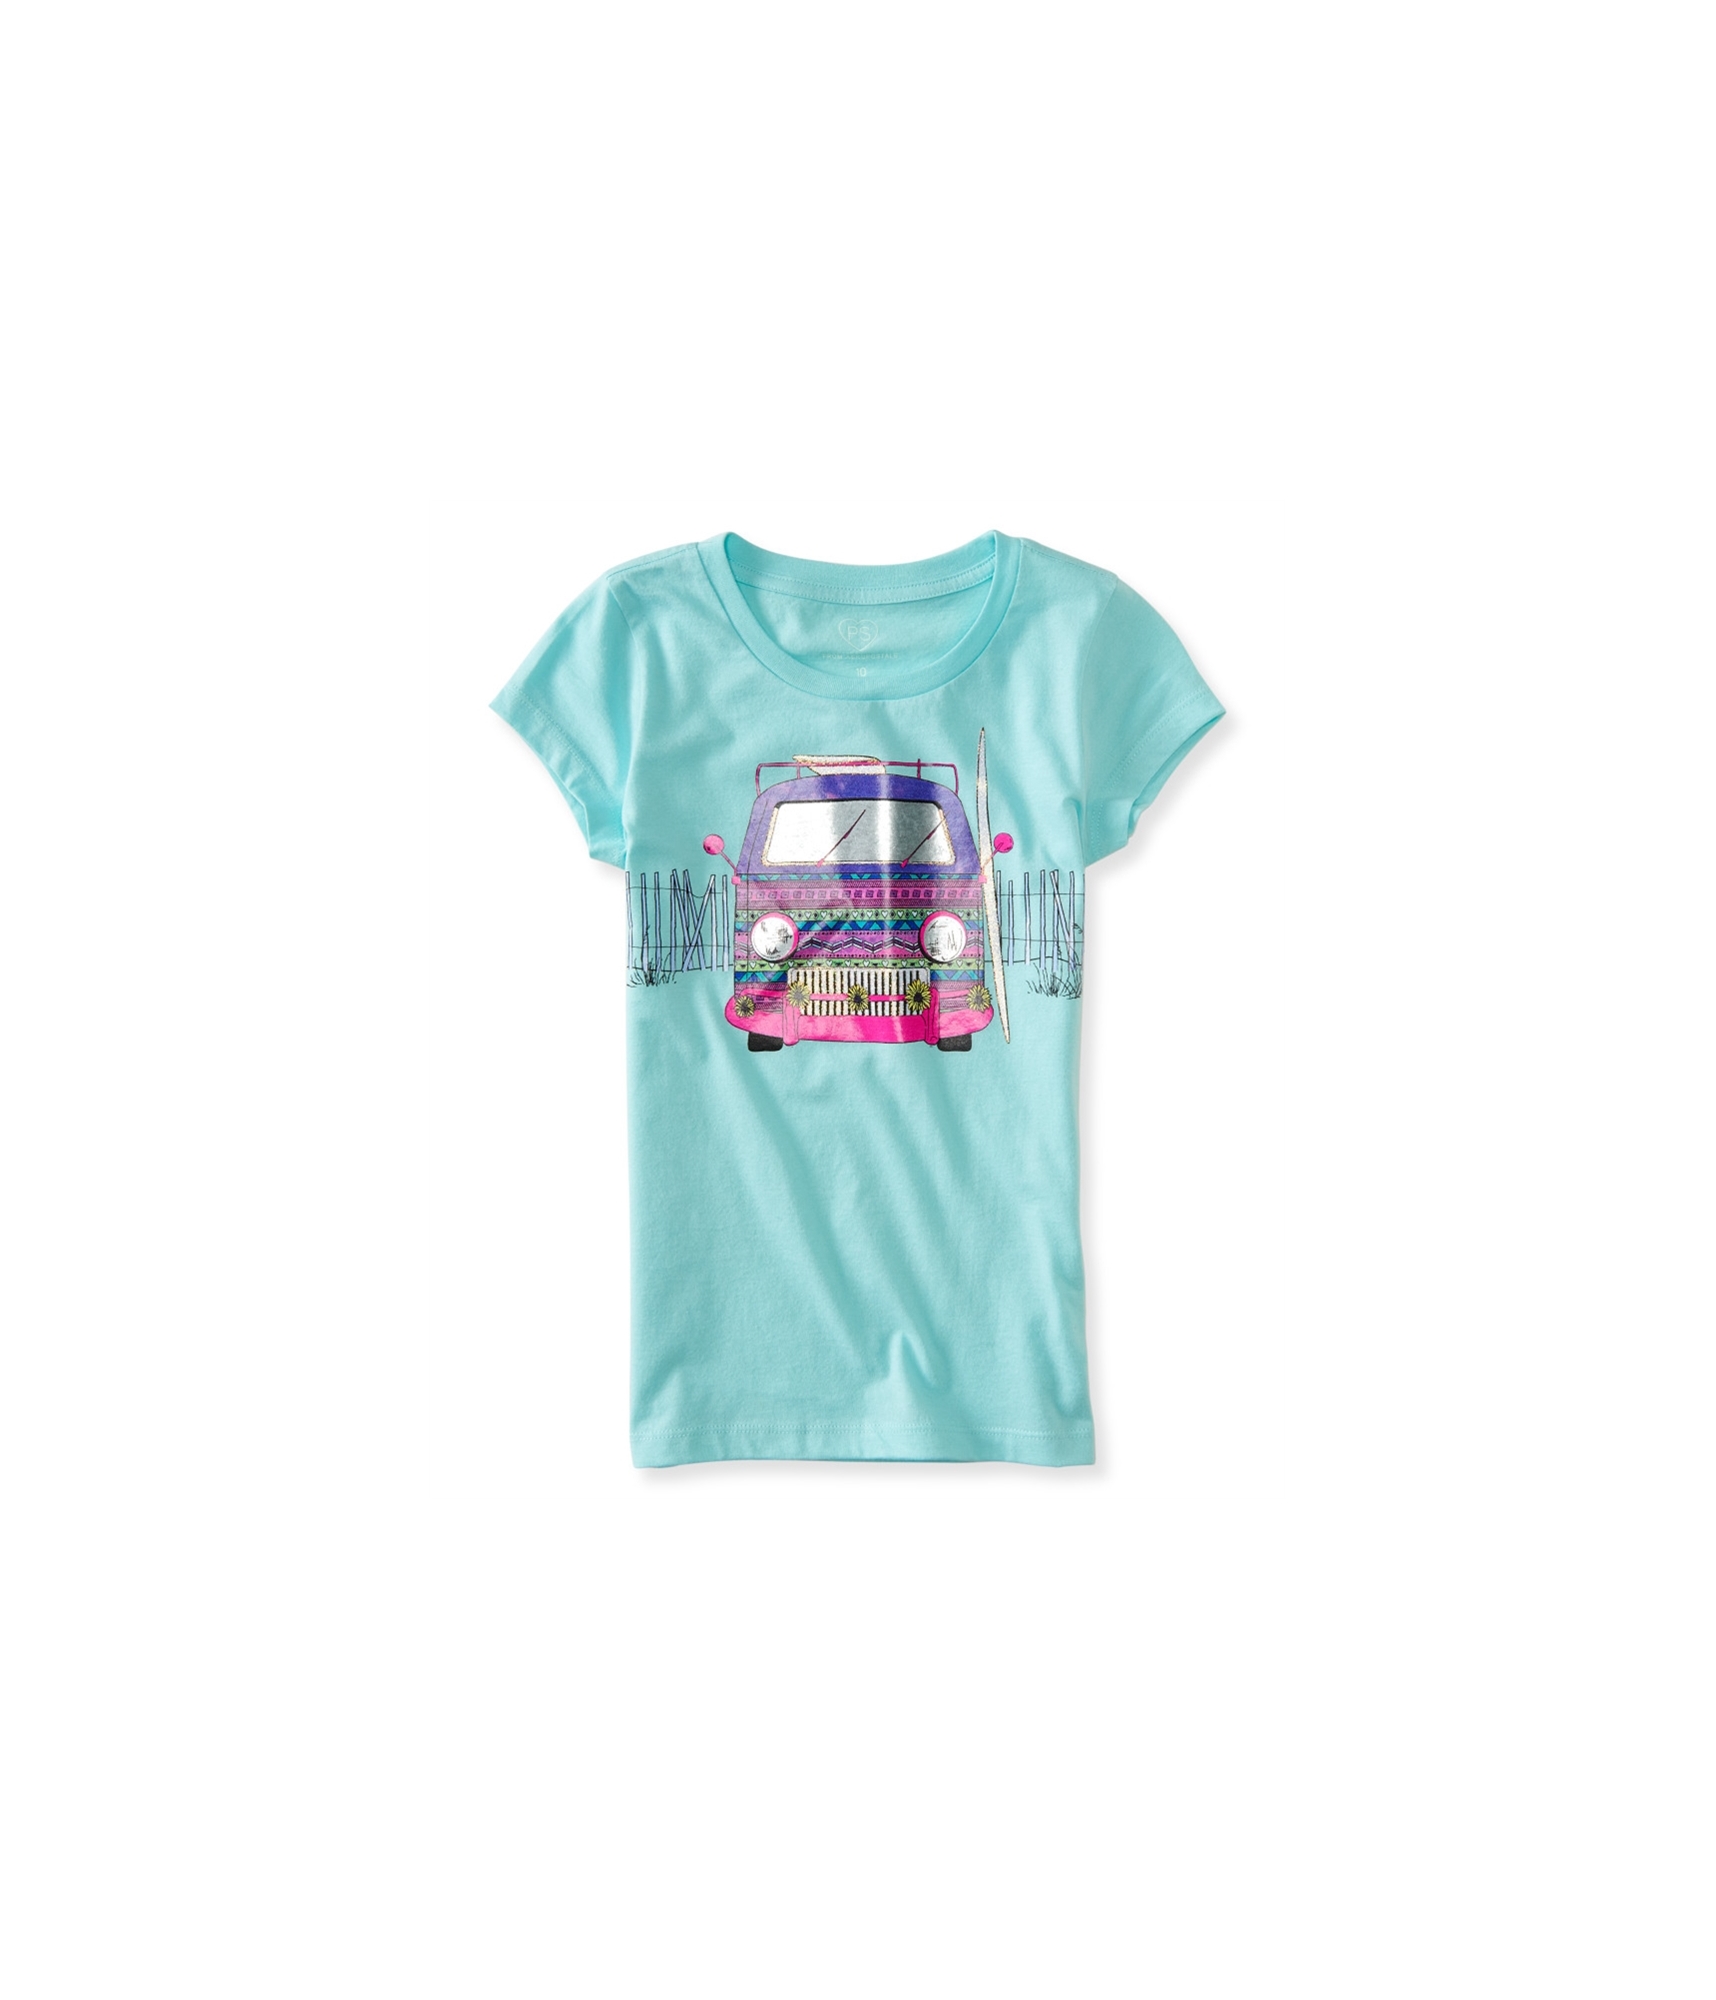 Buy a Aeropostale Girls Surf Bus Graphic T-Shirt